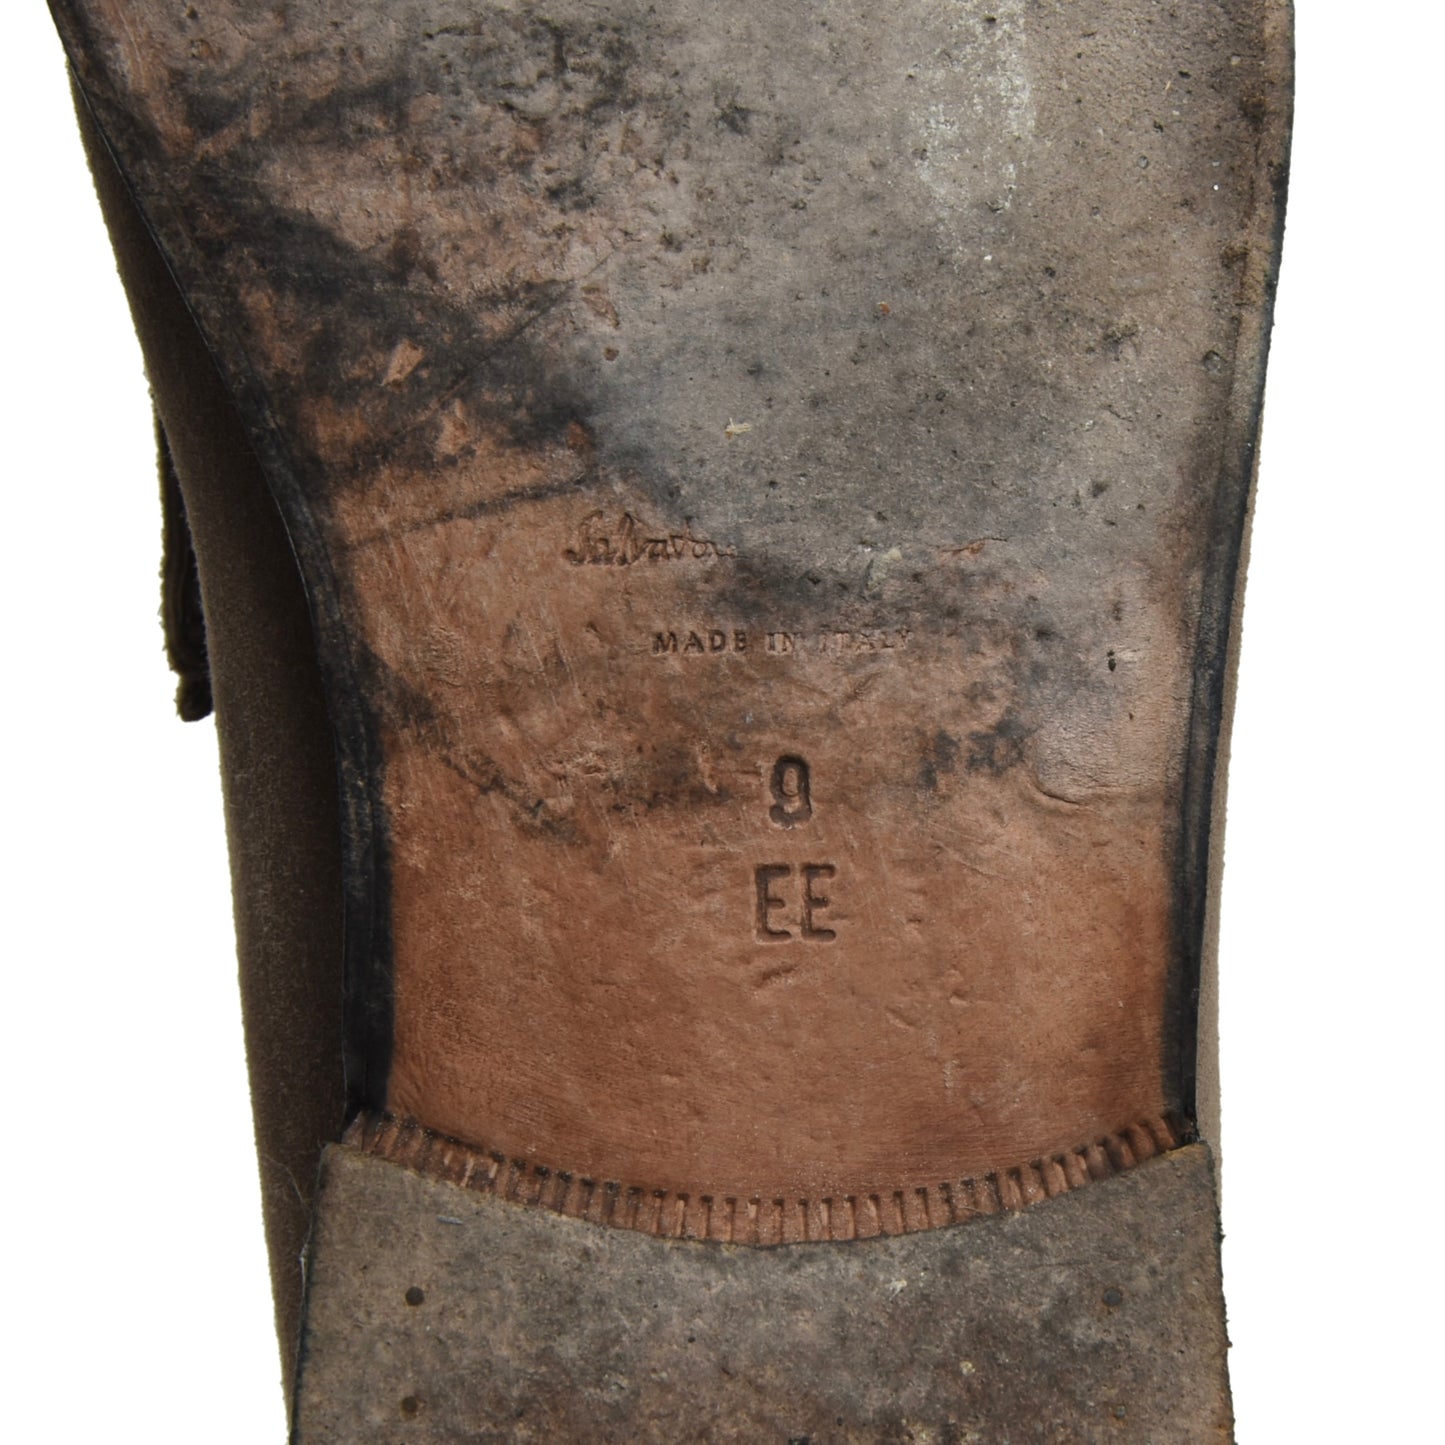 Salvatore Ferragamo Suede Loafer Shoes Size 9EE - Beige